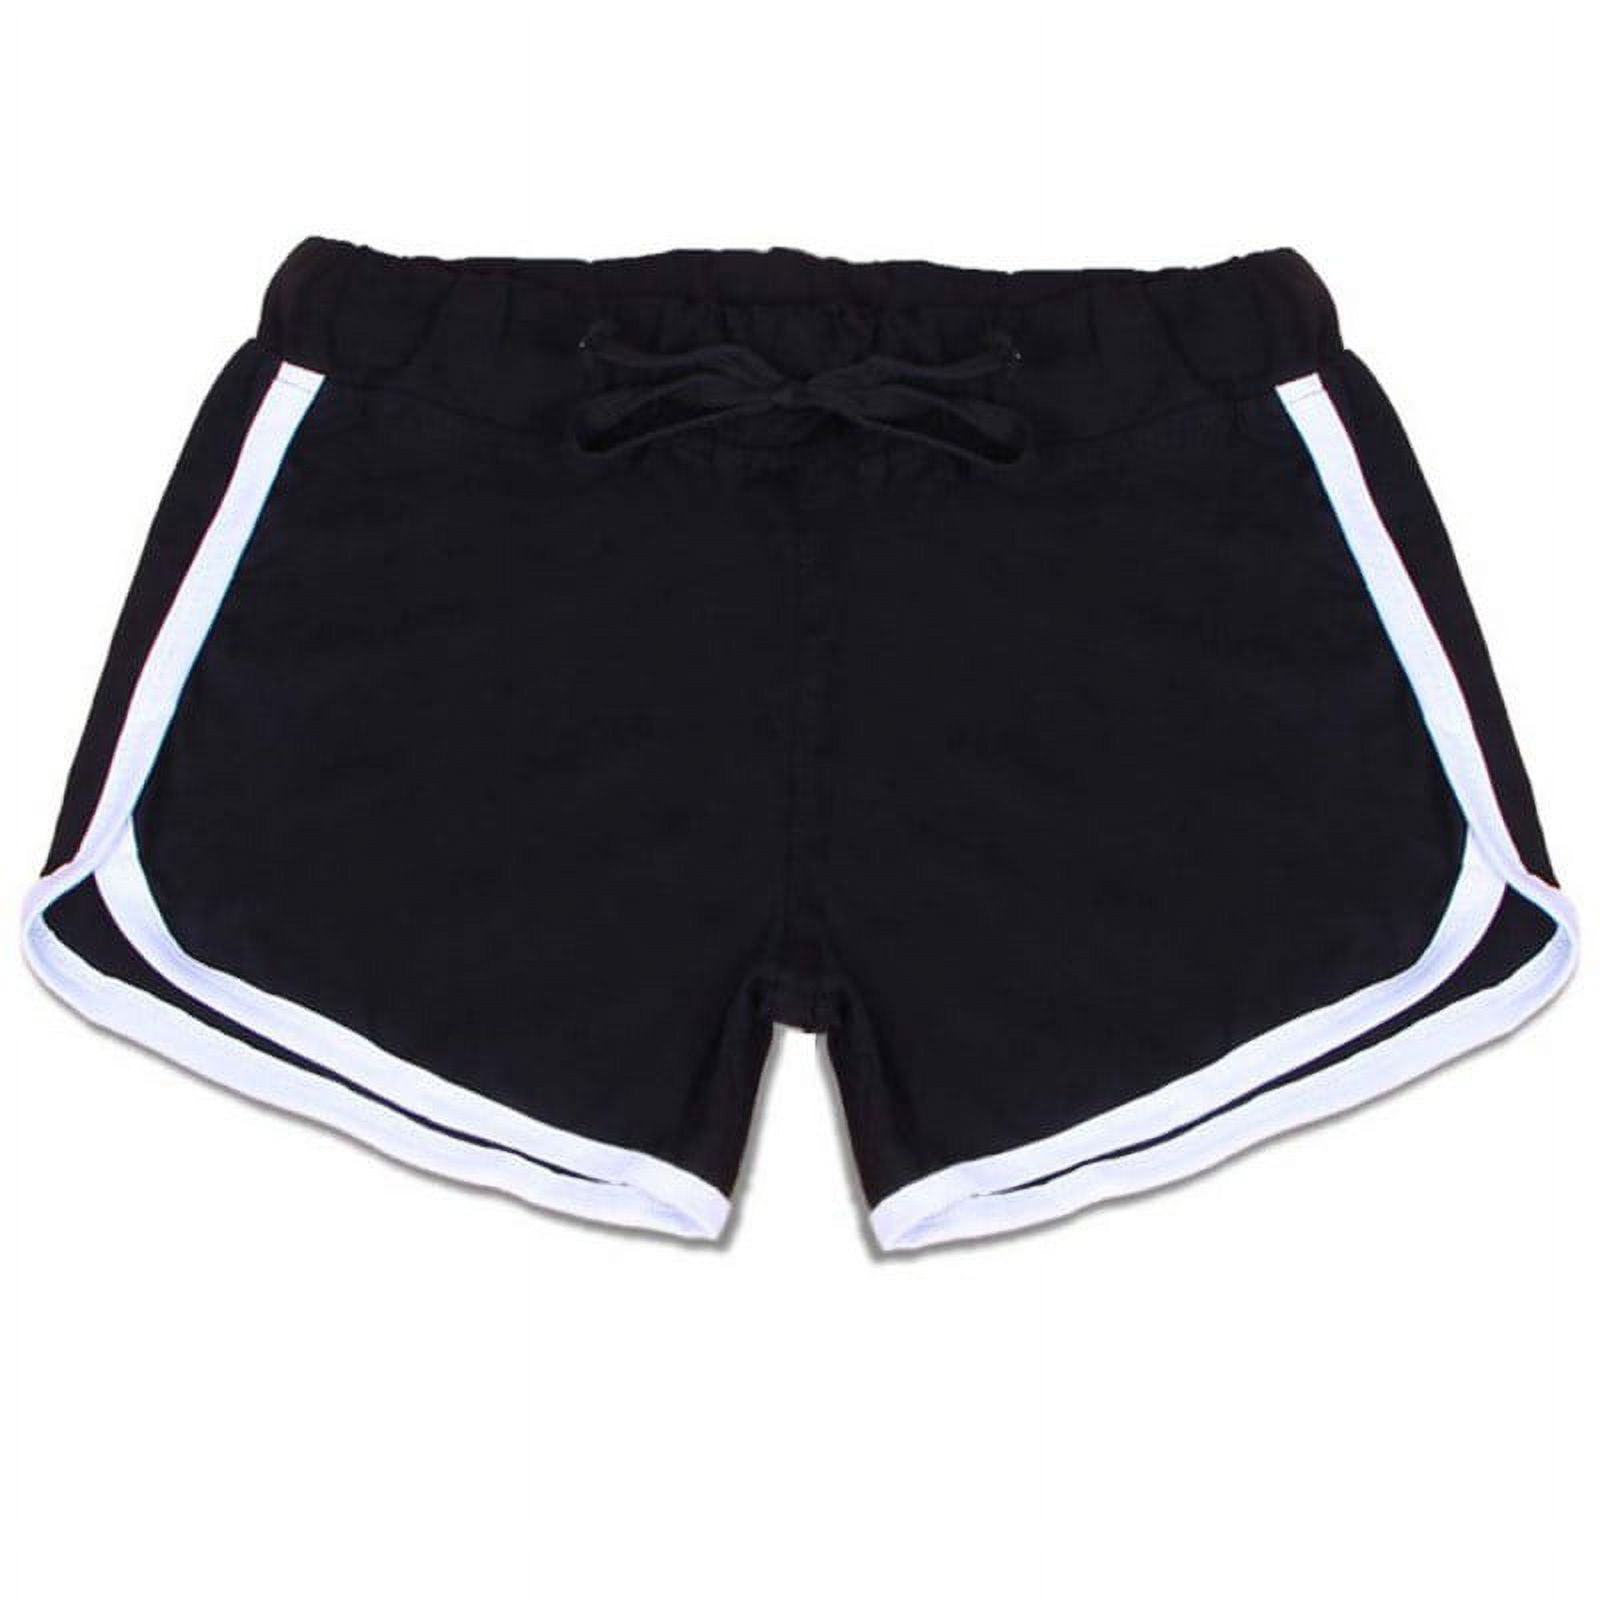 Boys Cotton Shorts - Black